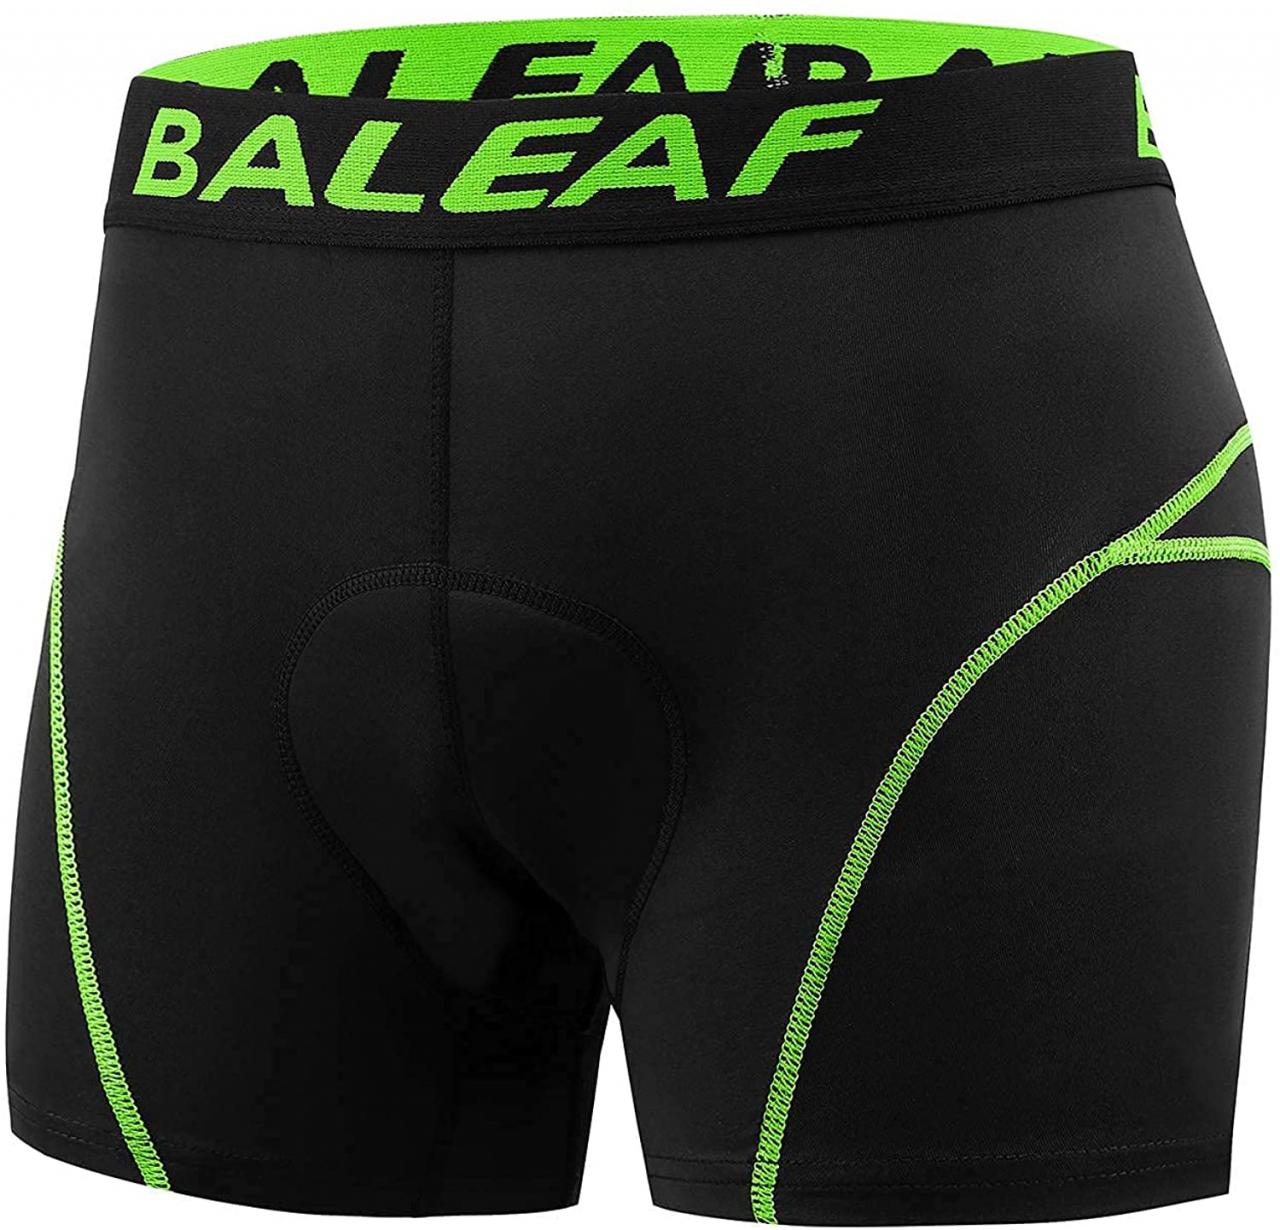 Buy BALEAF Men's 3D Padded Cycling Underwear Shorts - Bike Undershorts  Bicycle MTB Underpants Online in Hong Kong. B085KX8BM5